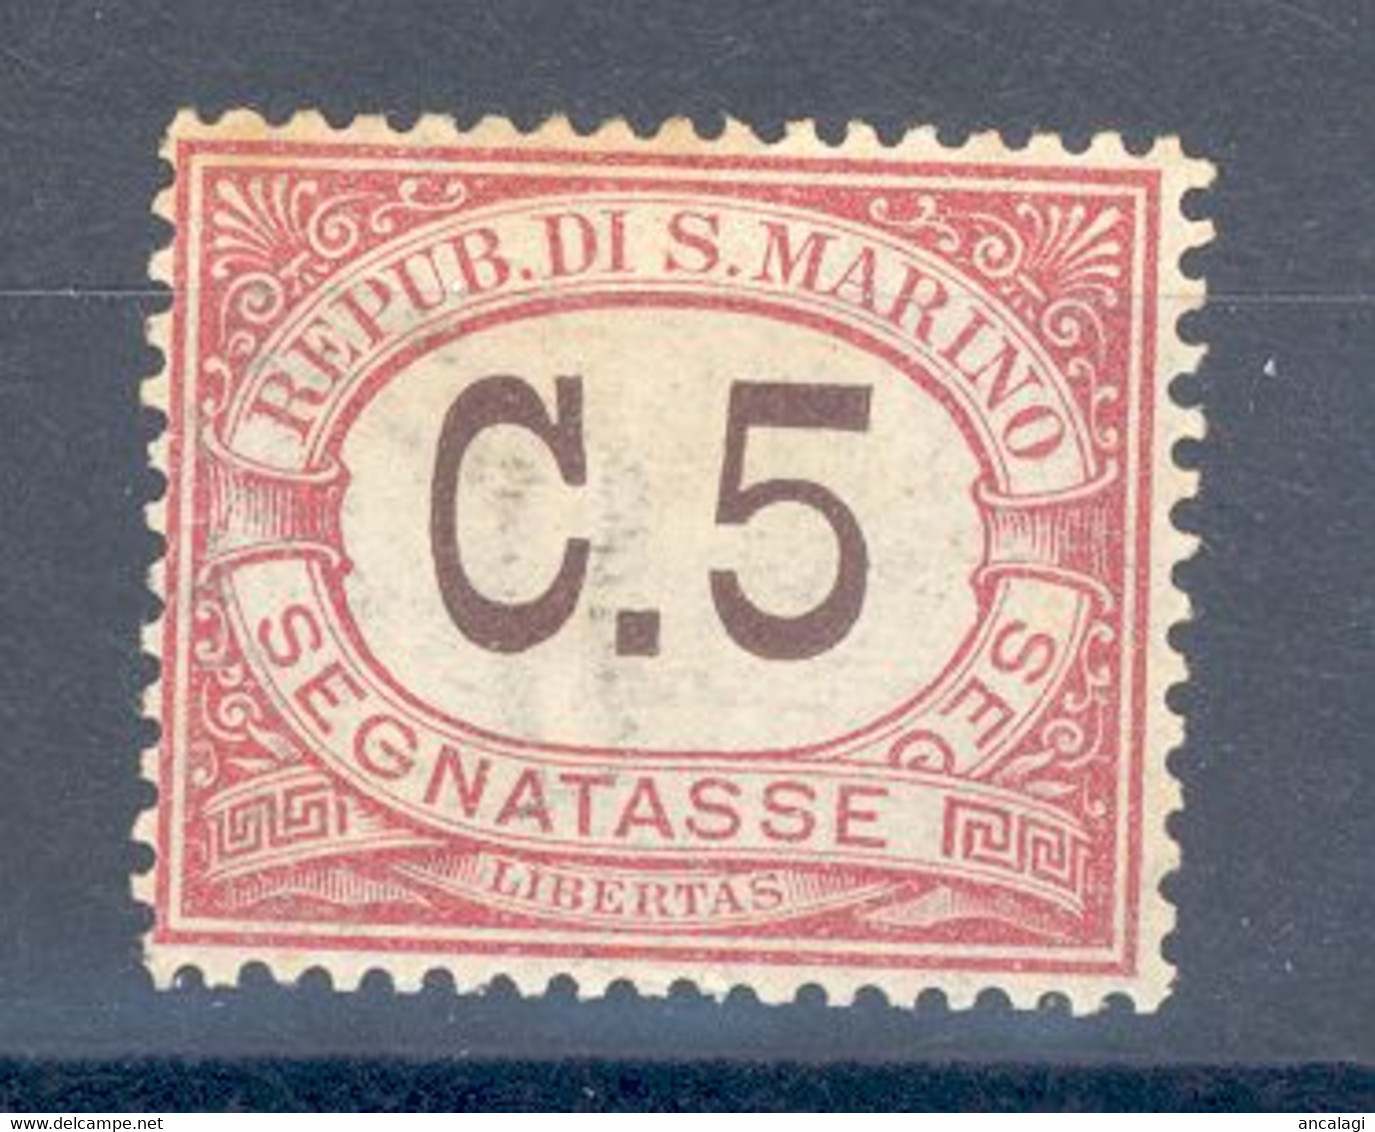 RSM F.lli Nuovi Segnatasse 006 - San Marino 1924 - 1v. C.5 - Impuestos